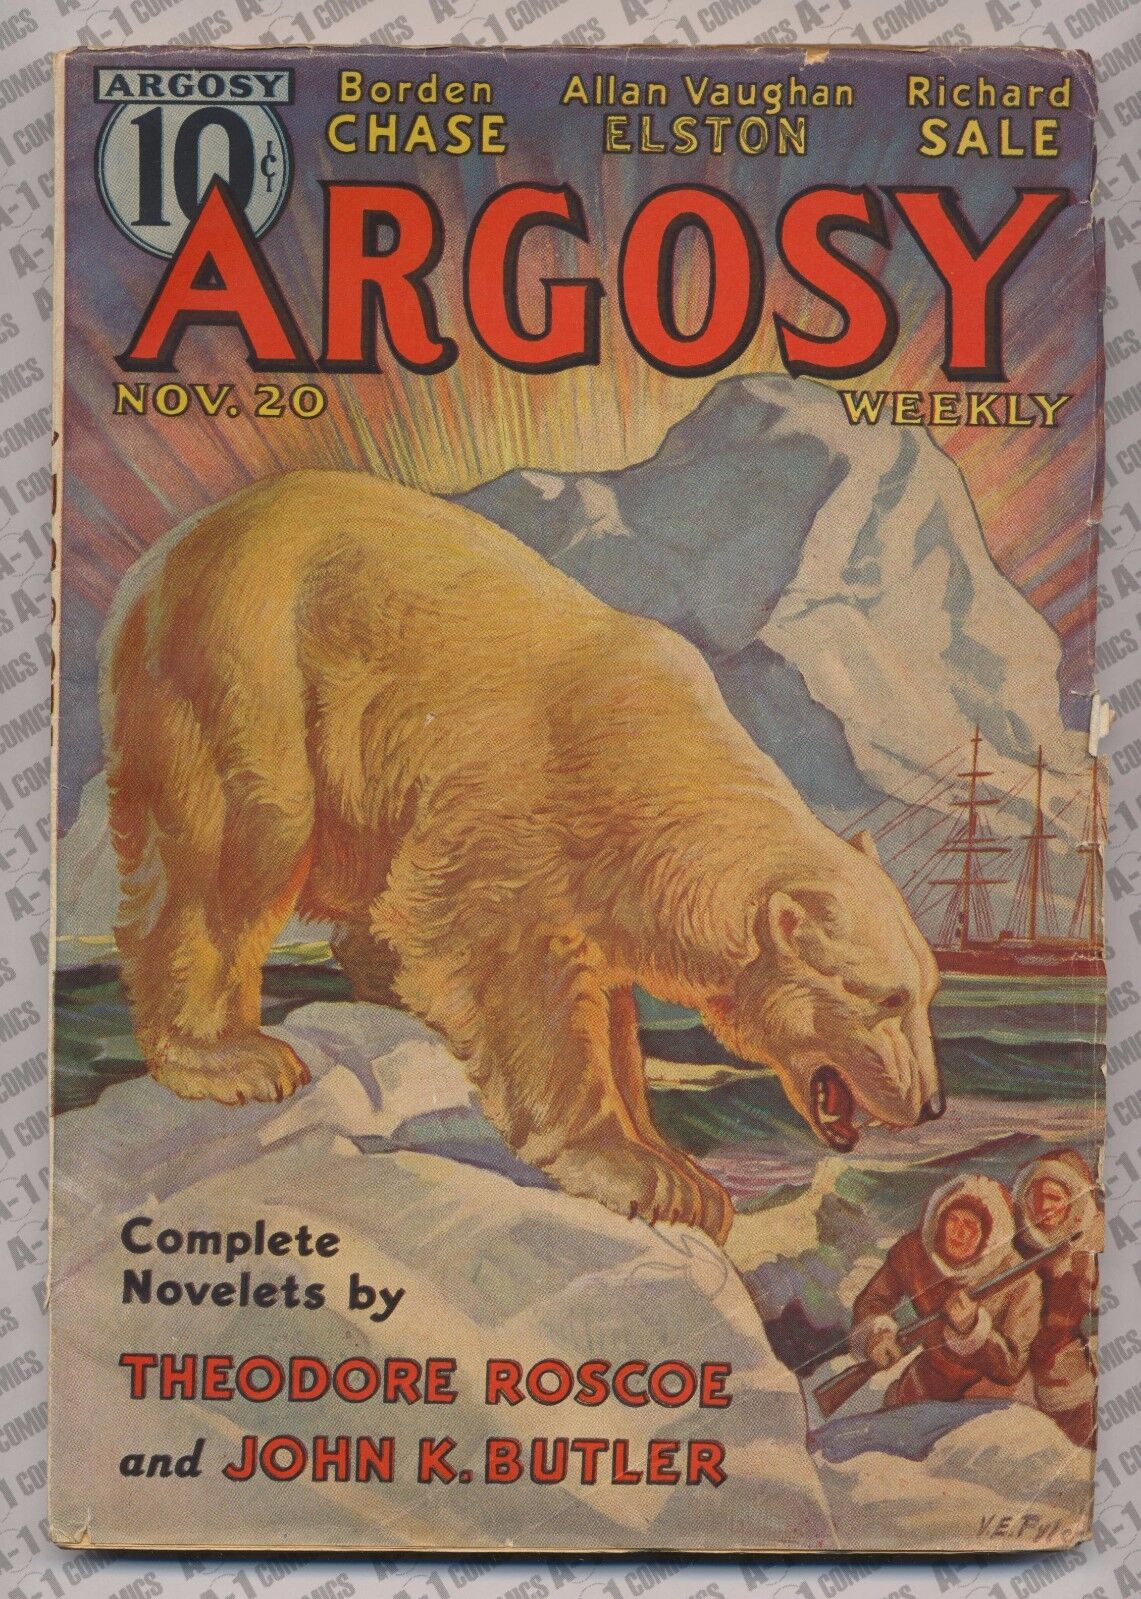 Argosy November 20, 1937 Vintage Pulp Magazine Very Good Plus